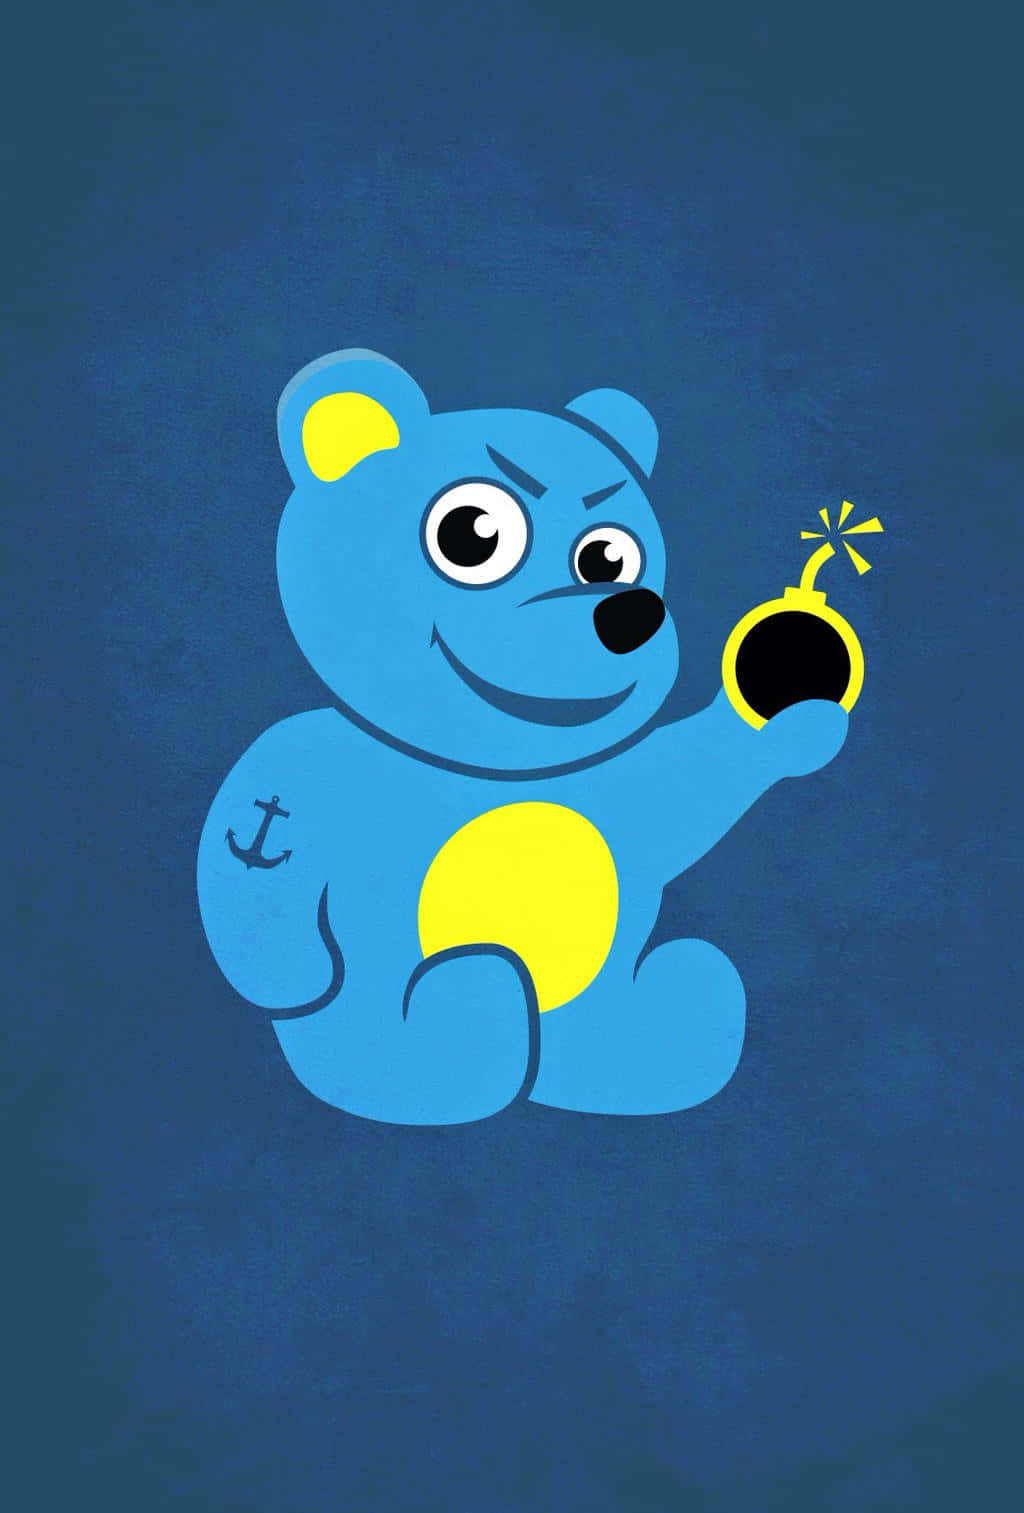 Blue Bear Holding Bomb Illustration Wallpaper